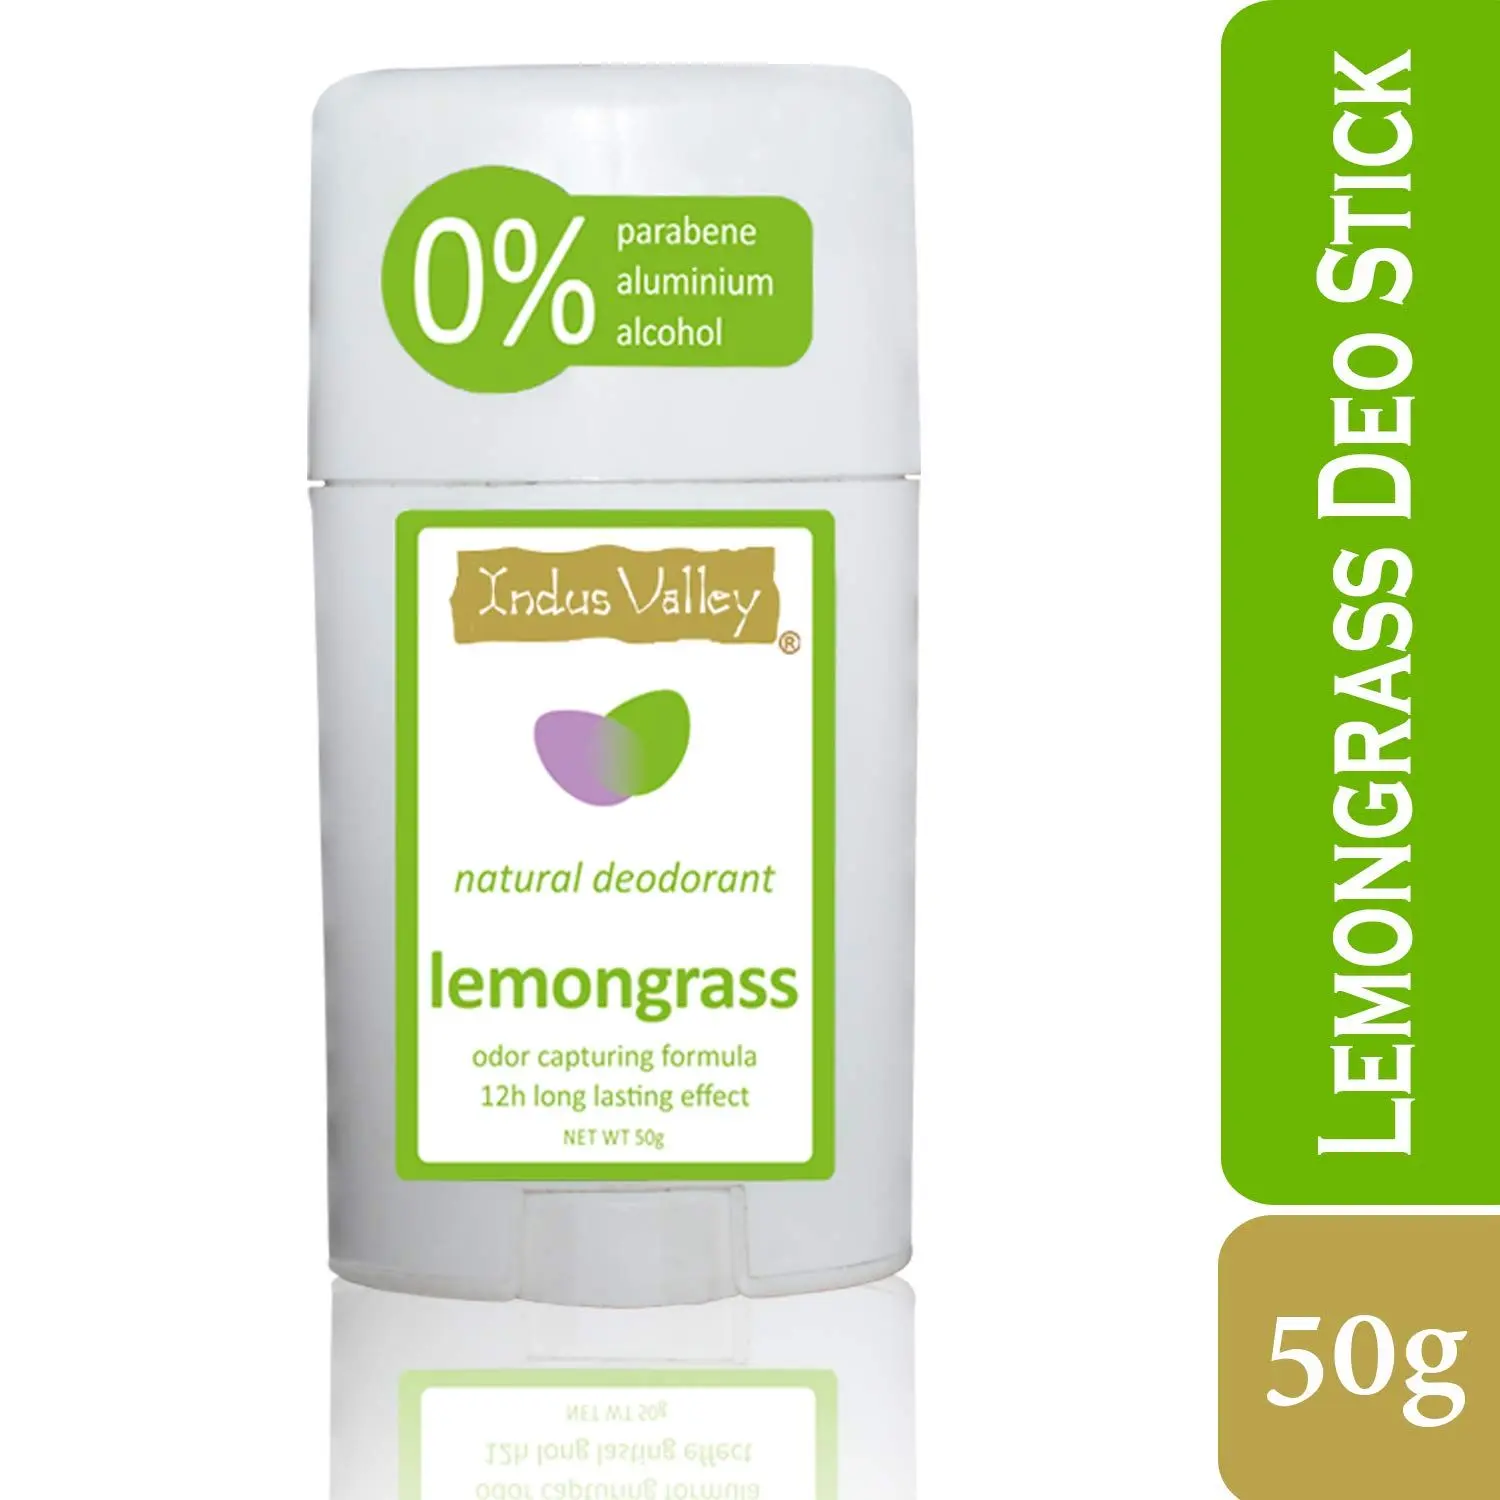 Indus Valley Lemongrass Alcohol Free, Aluminium Free Daily use Deodorant Stick (12 Hour Long Lasting Effect)